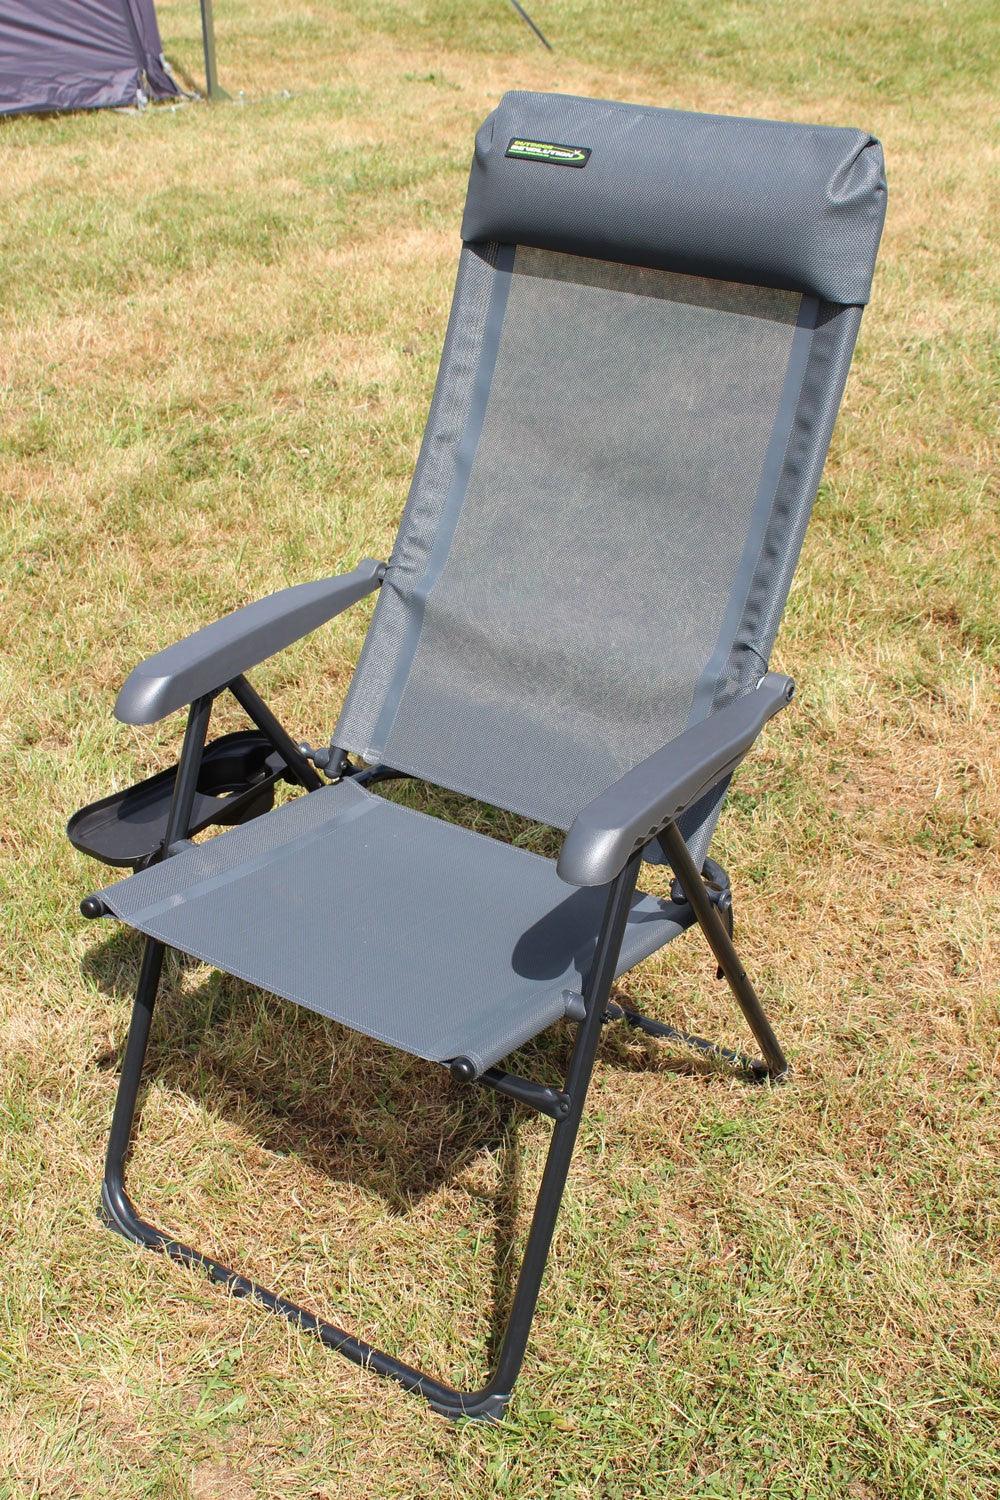 Outdoor Revolution Palermo Tex Chair - Towsure